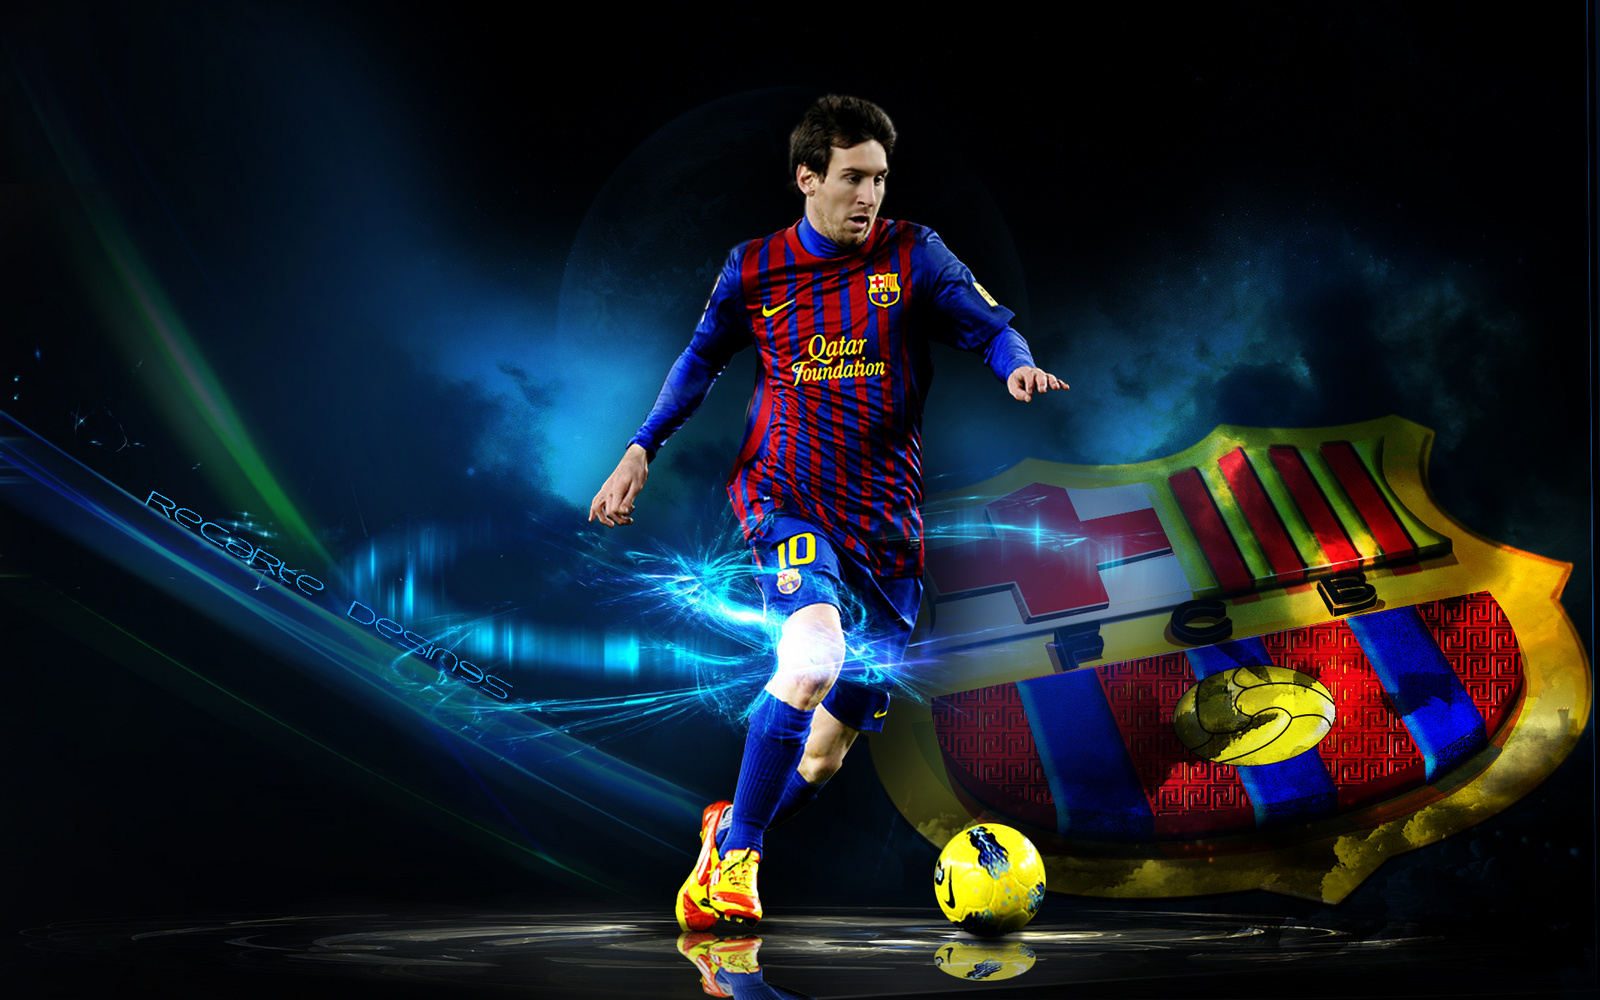 Wallpaper Messi Hd - Football Wallpaper Messi - HD Wallpaper 